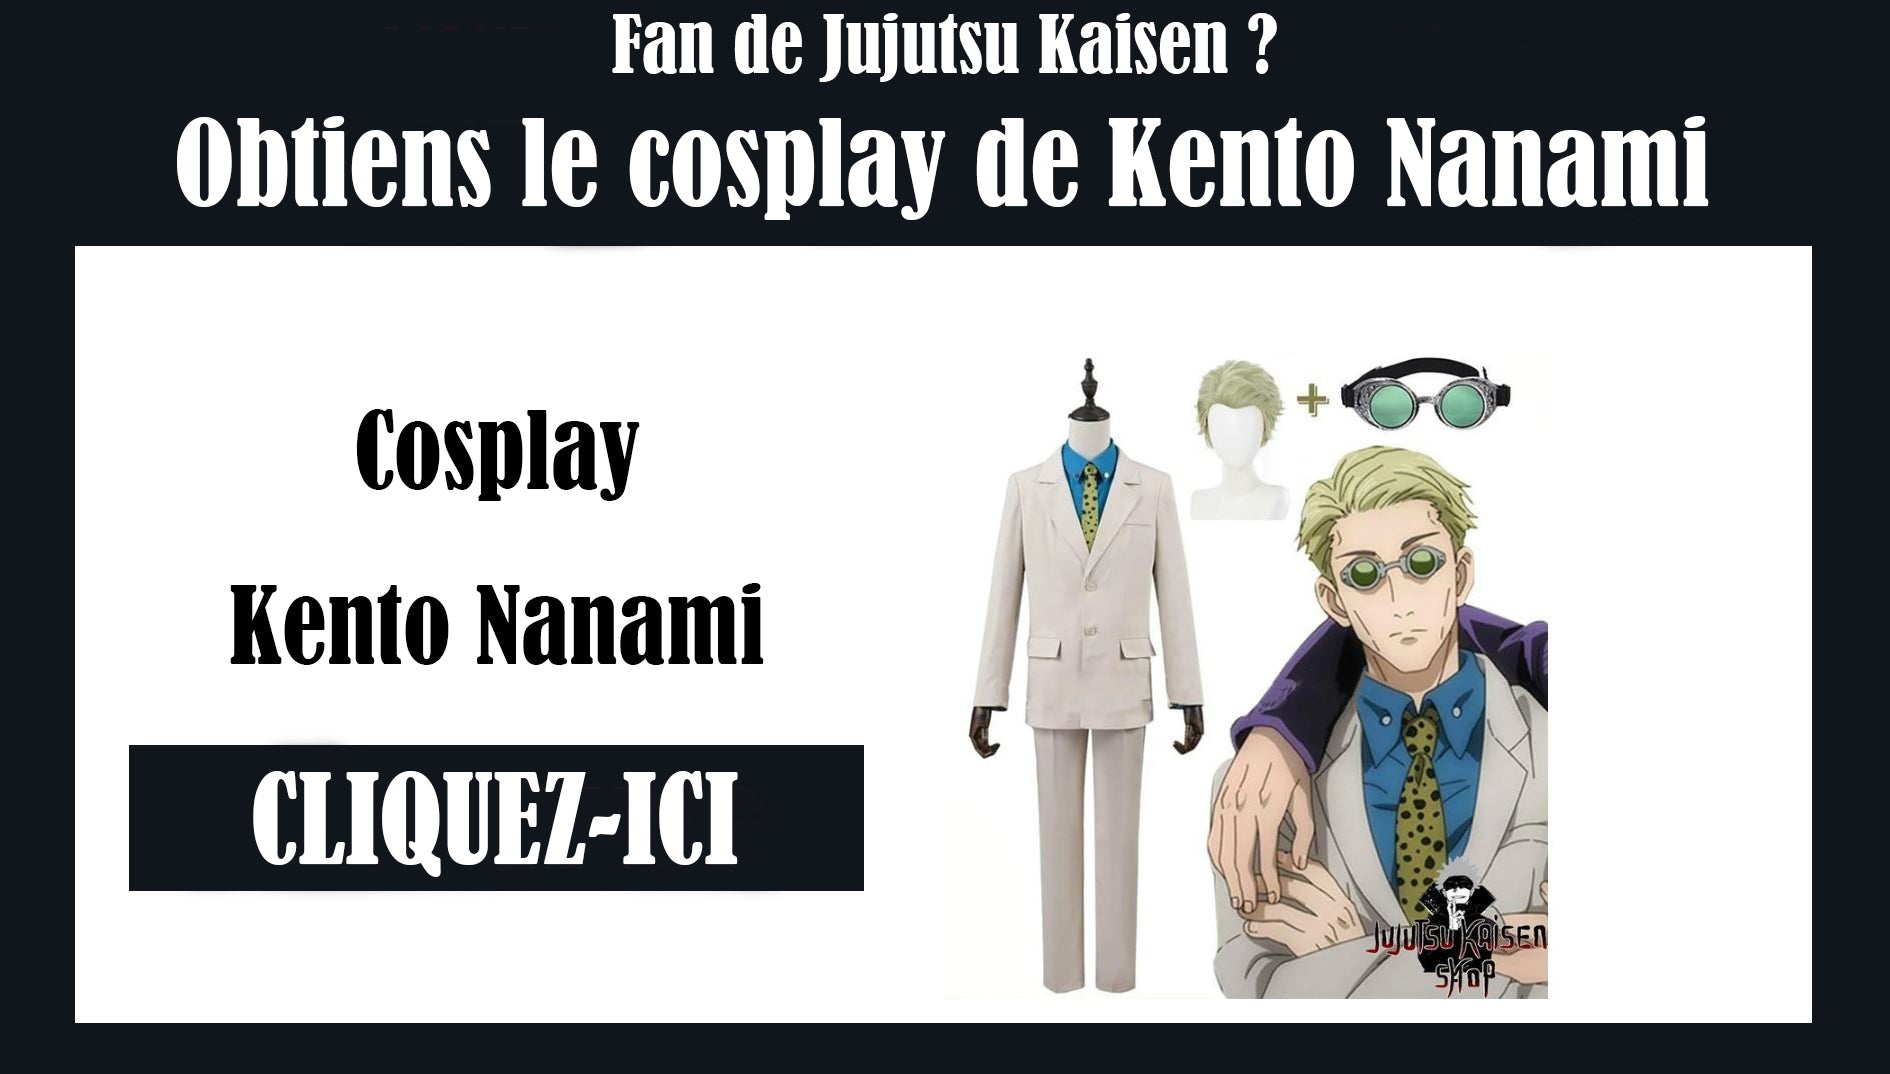 cosplay kento nanami